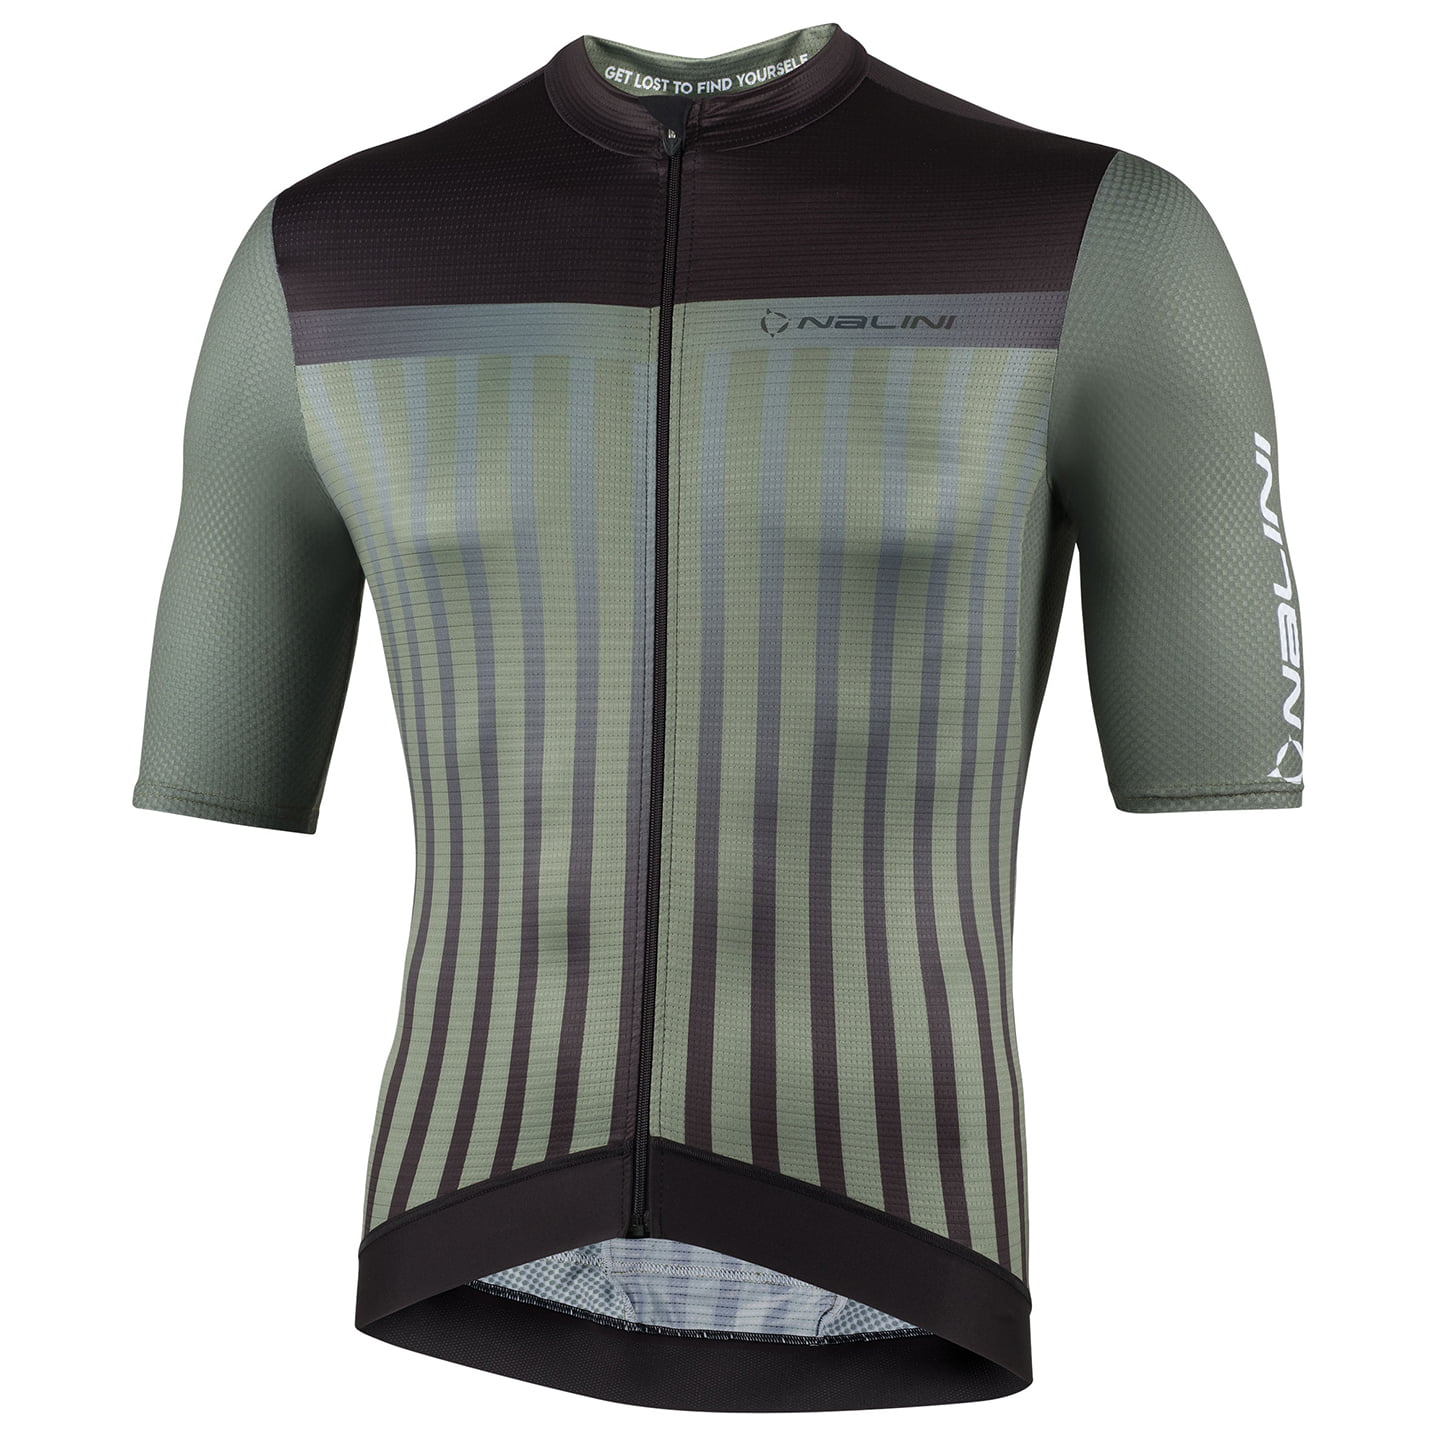 NALINI New Respect Short Sleeve Jersey Short Sleeve Jersey, for men, size 2XL, Cycling jersey, Cycle clothing